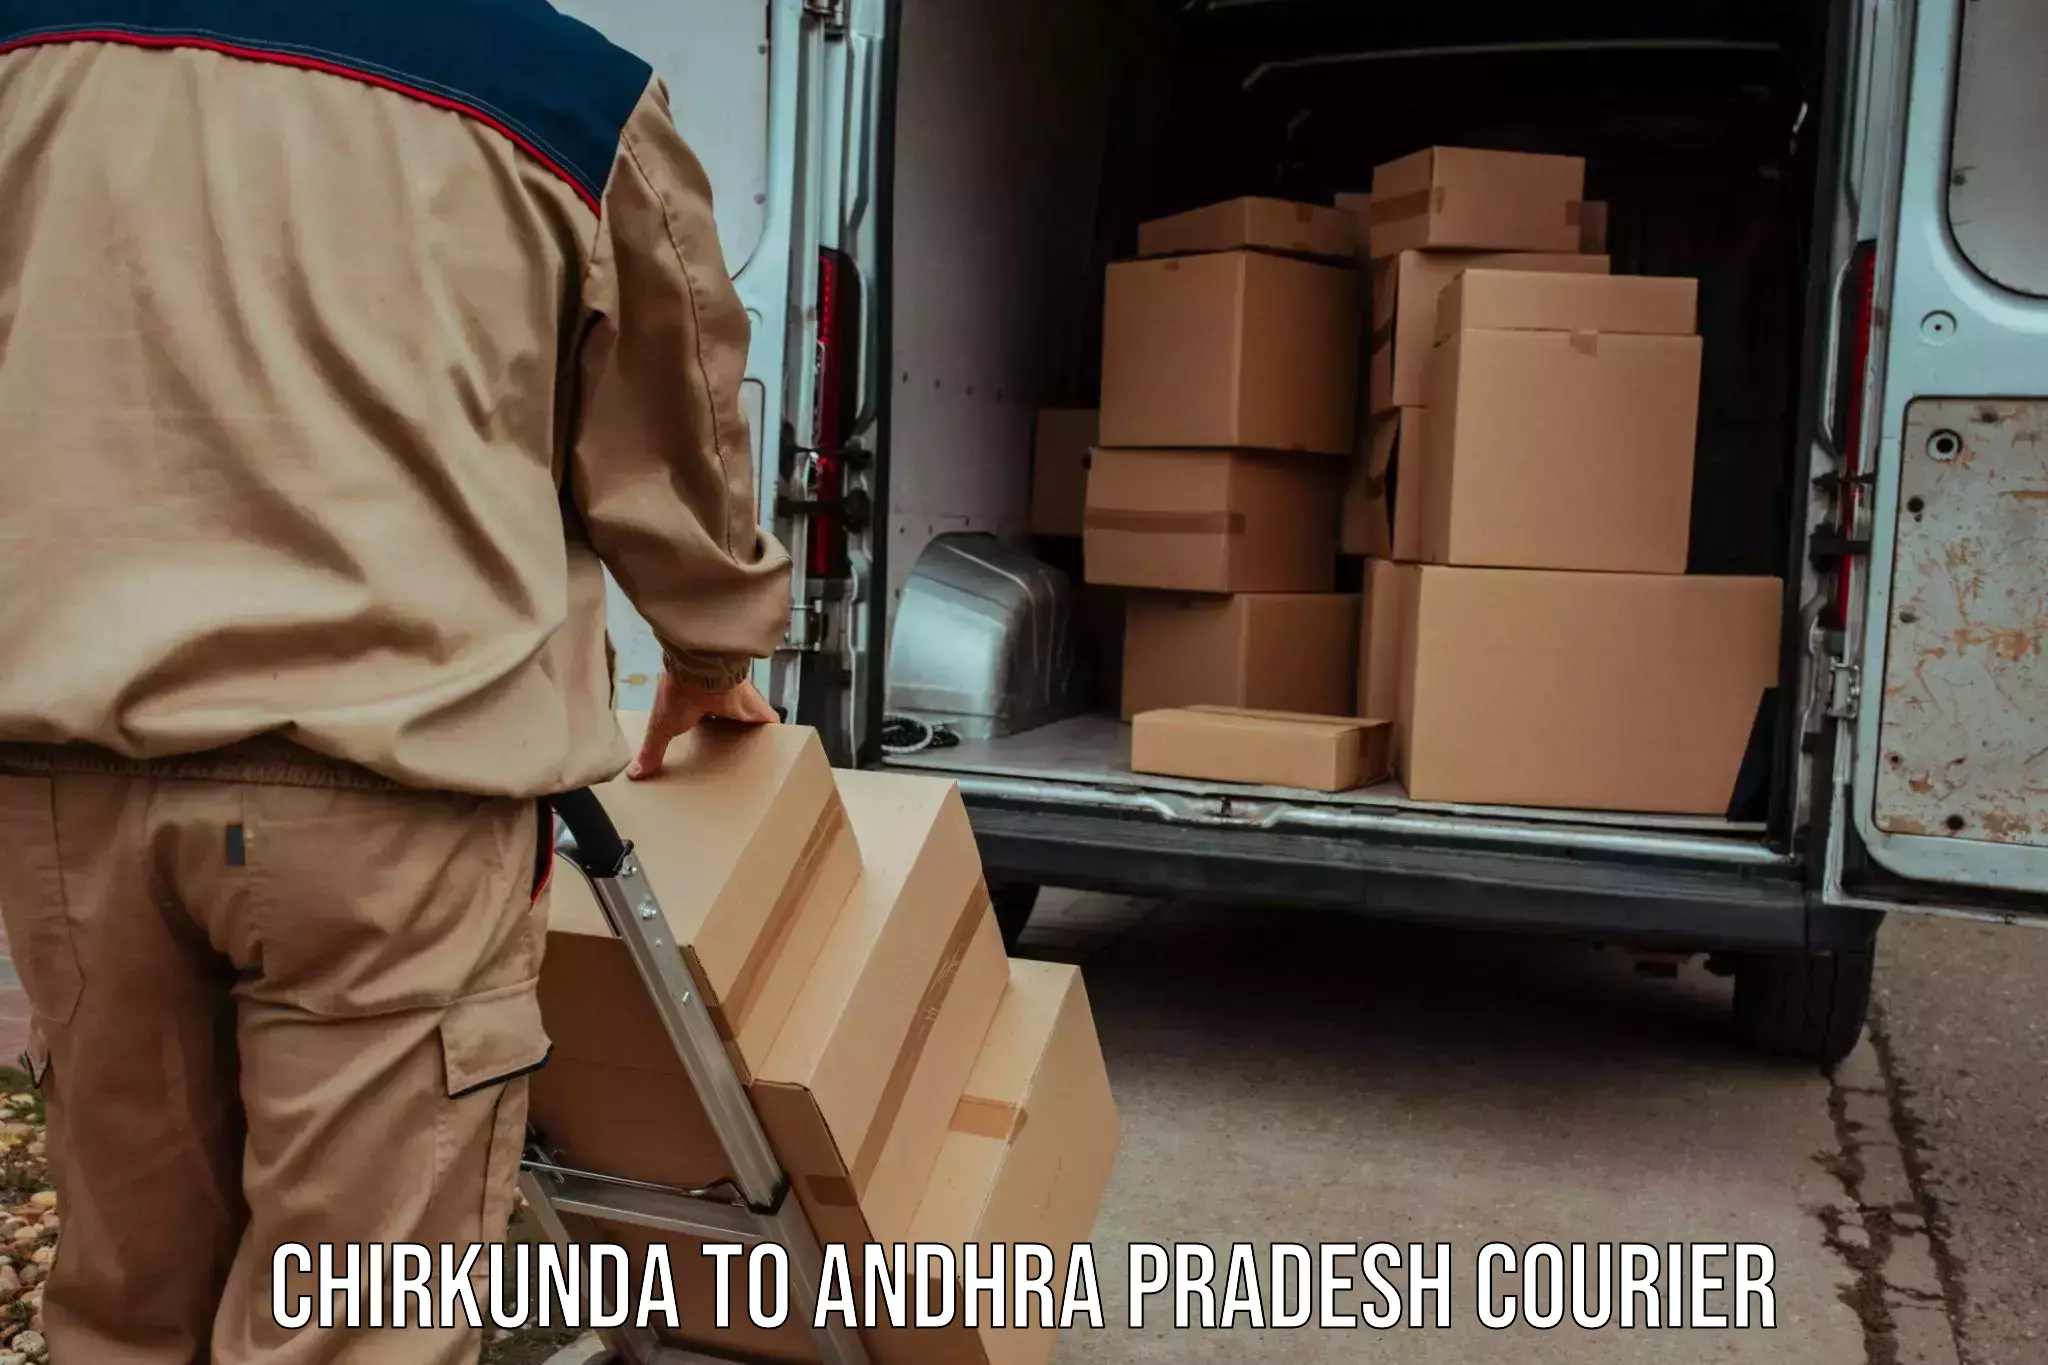 Express delivery network Chirkunda to Andhra Pradesh